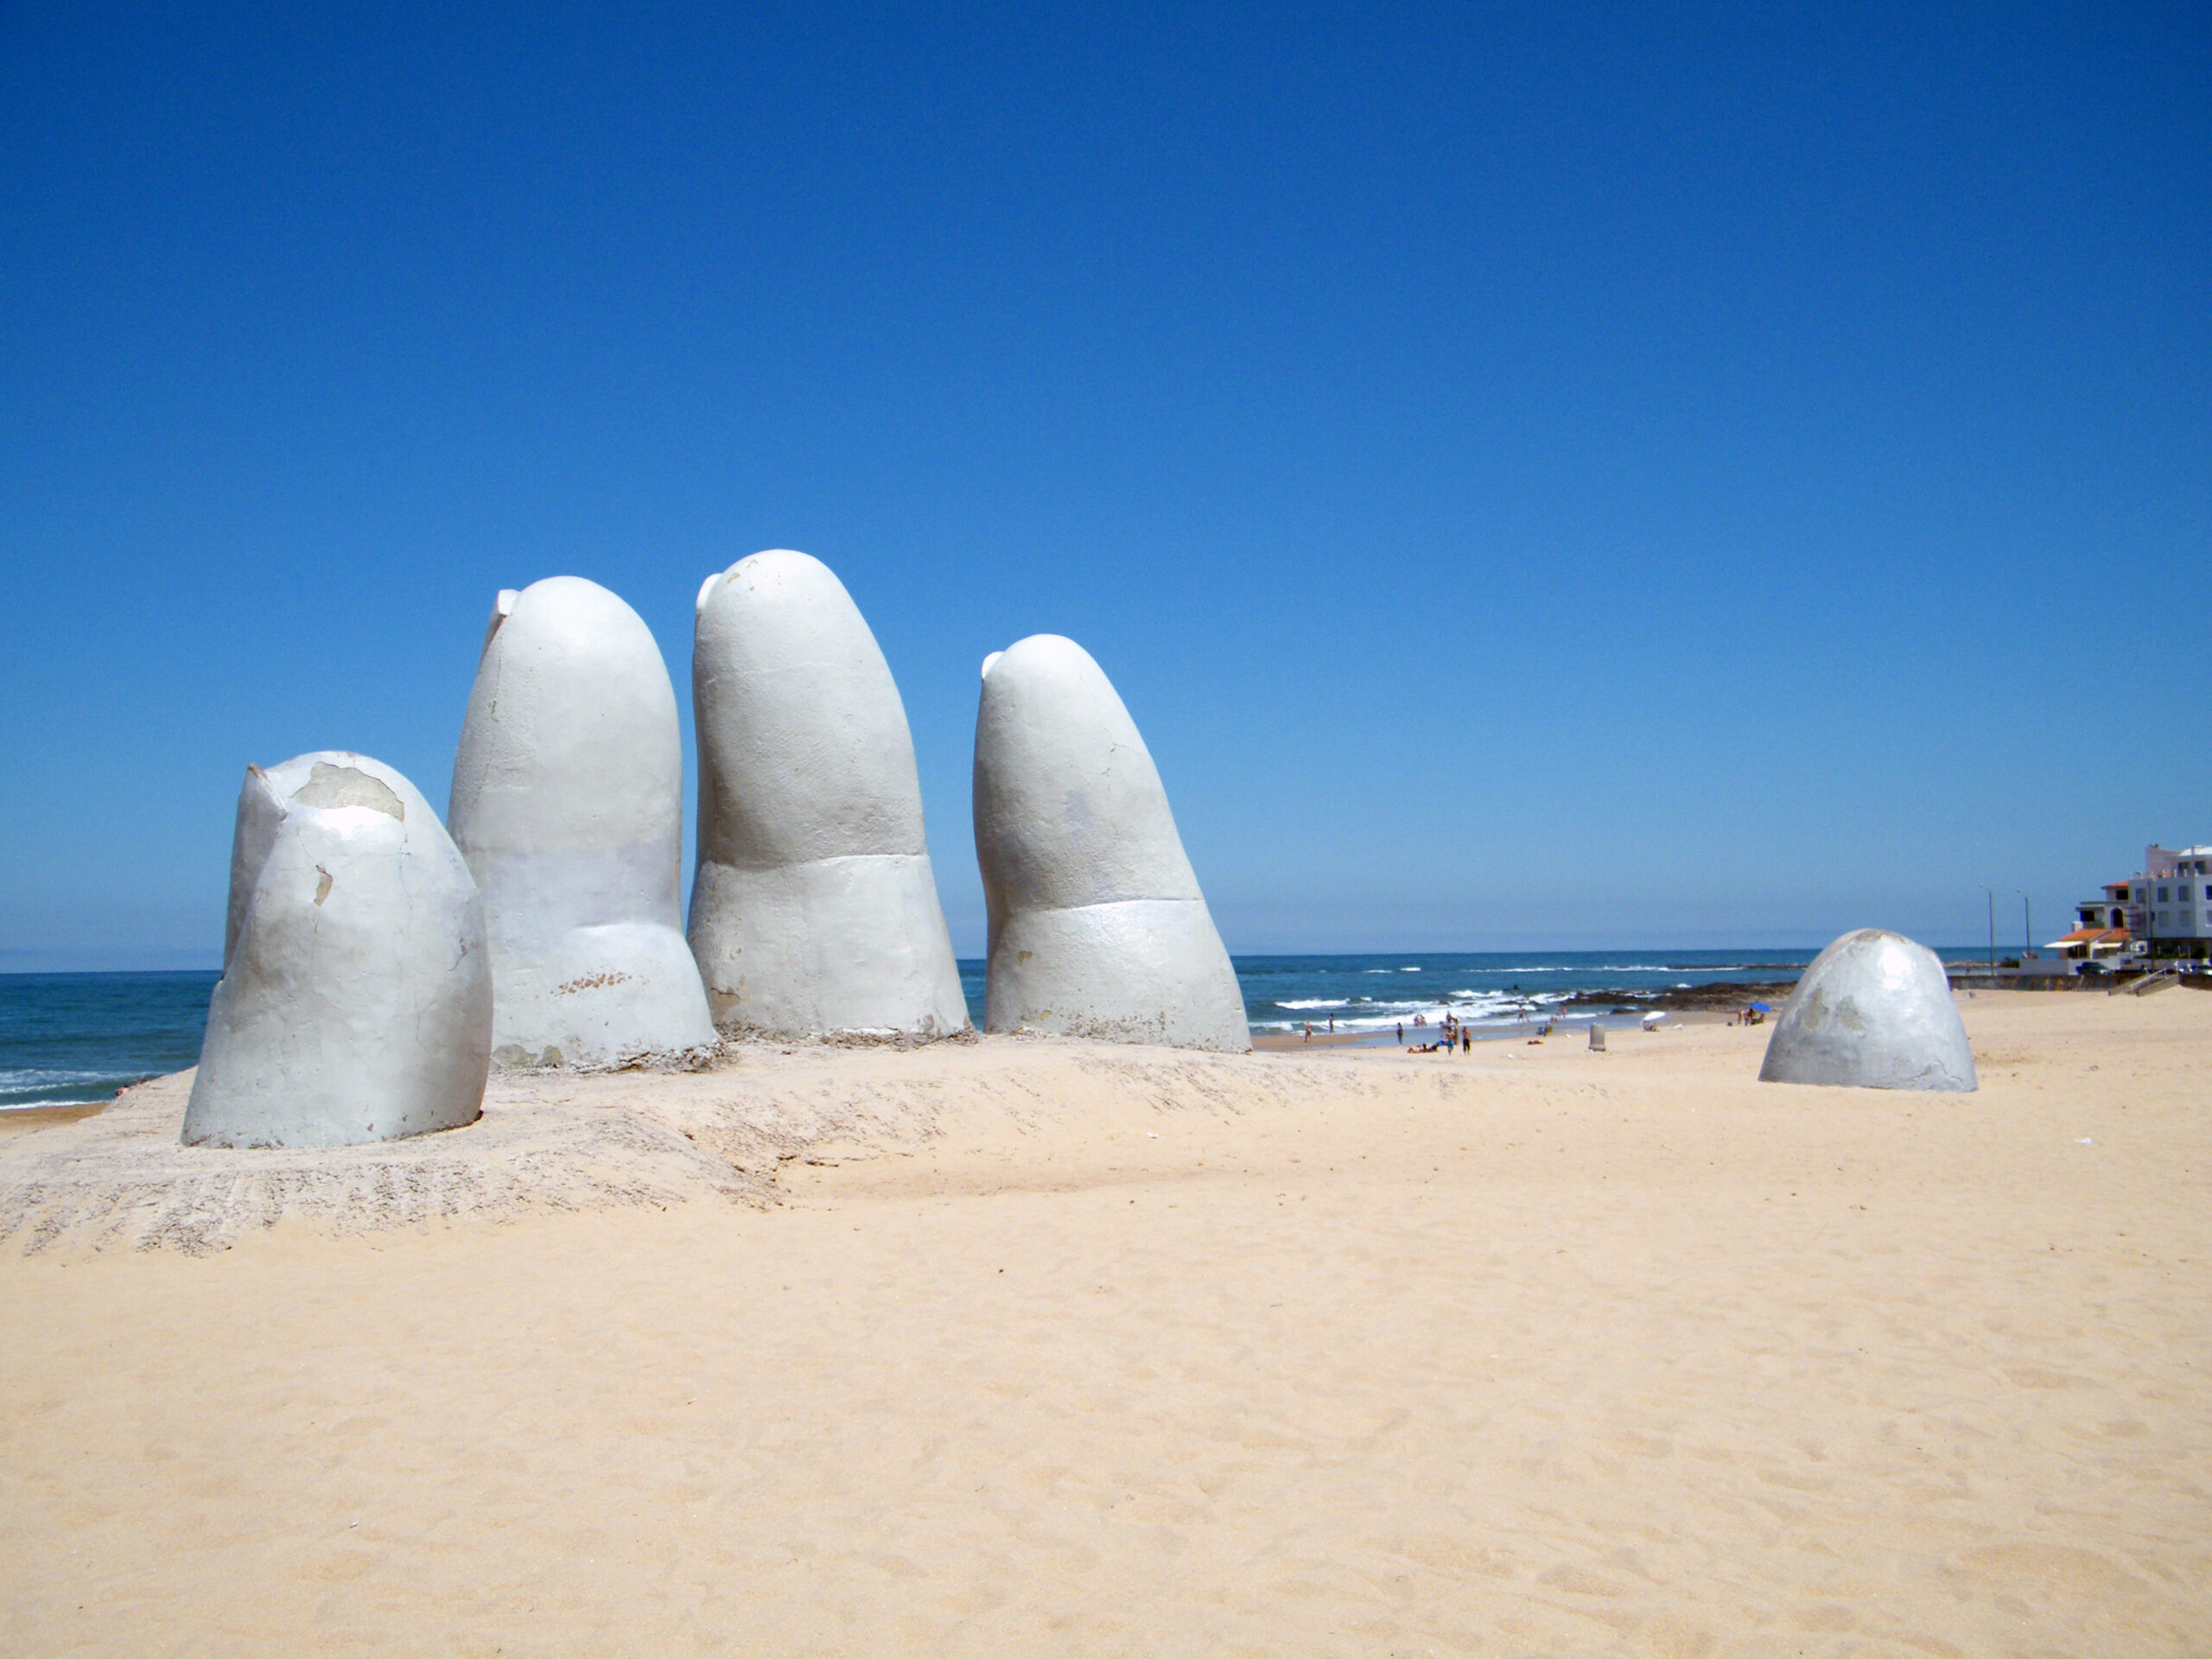 Captivating photo of The Hand of Punta del Este sculpture in Punta del Este, Uruguay